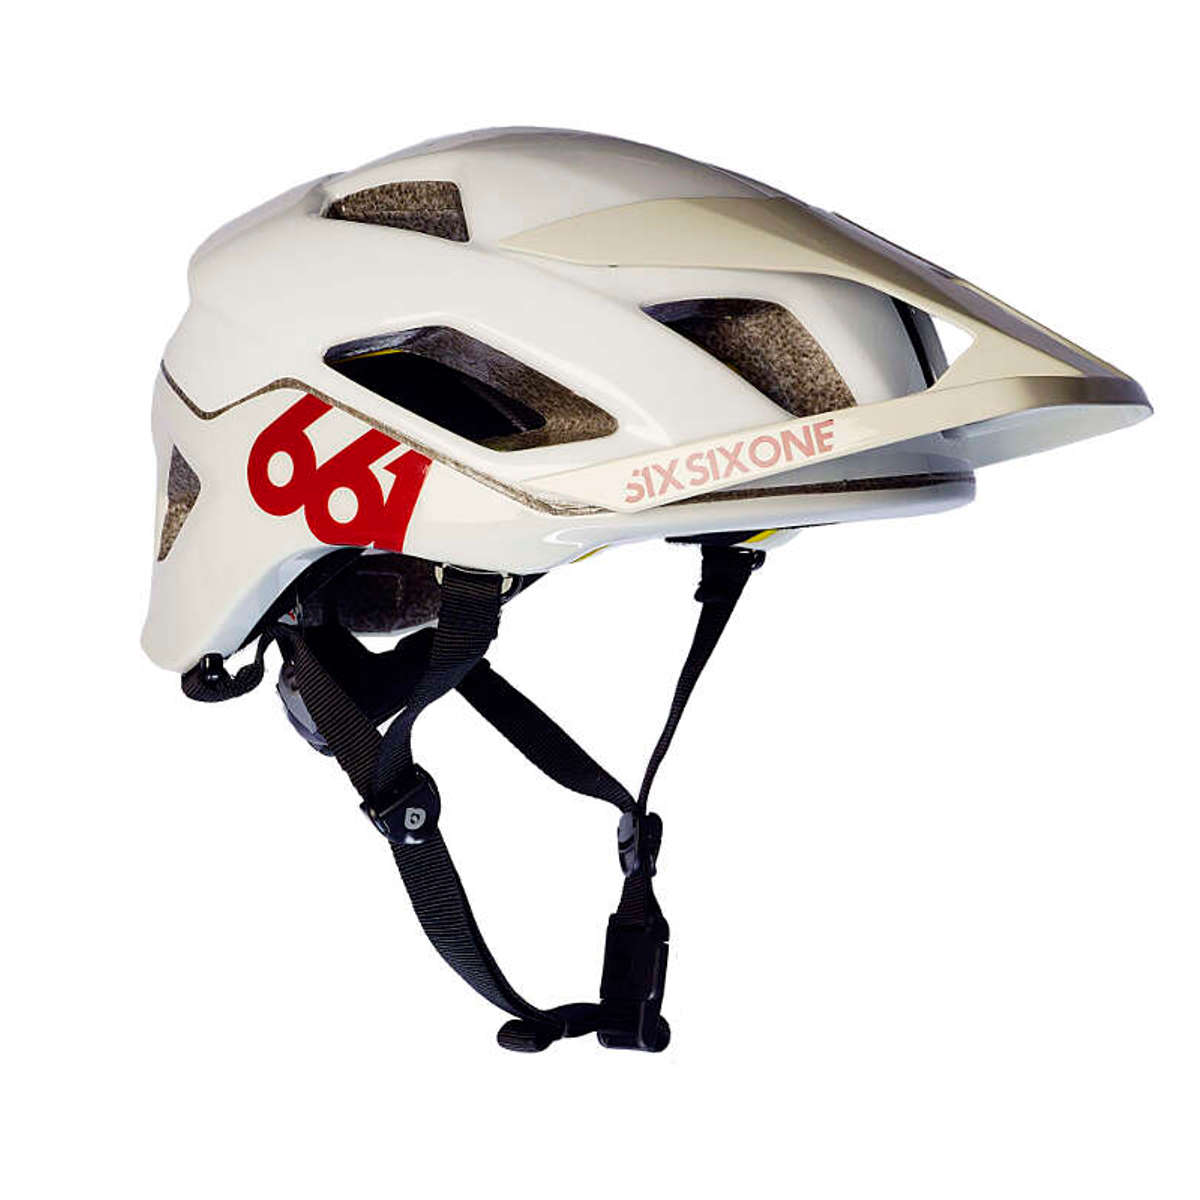 SixSixOne Enduro MTB Helmet Evo AM MIPS Tundra White